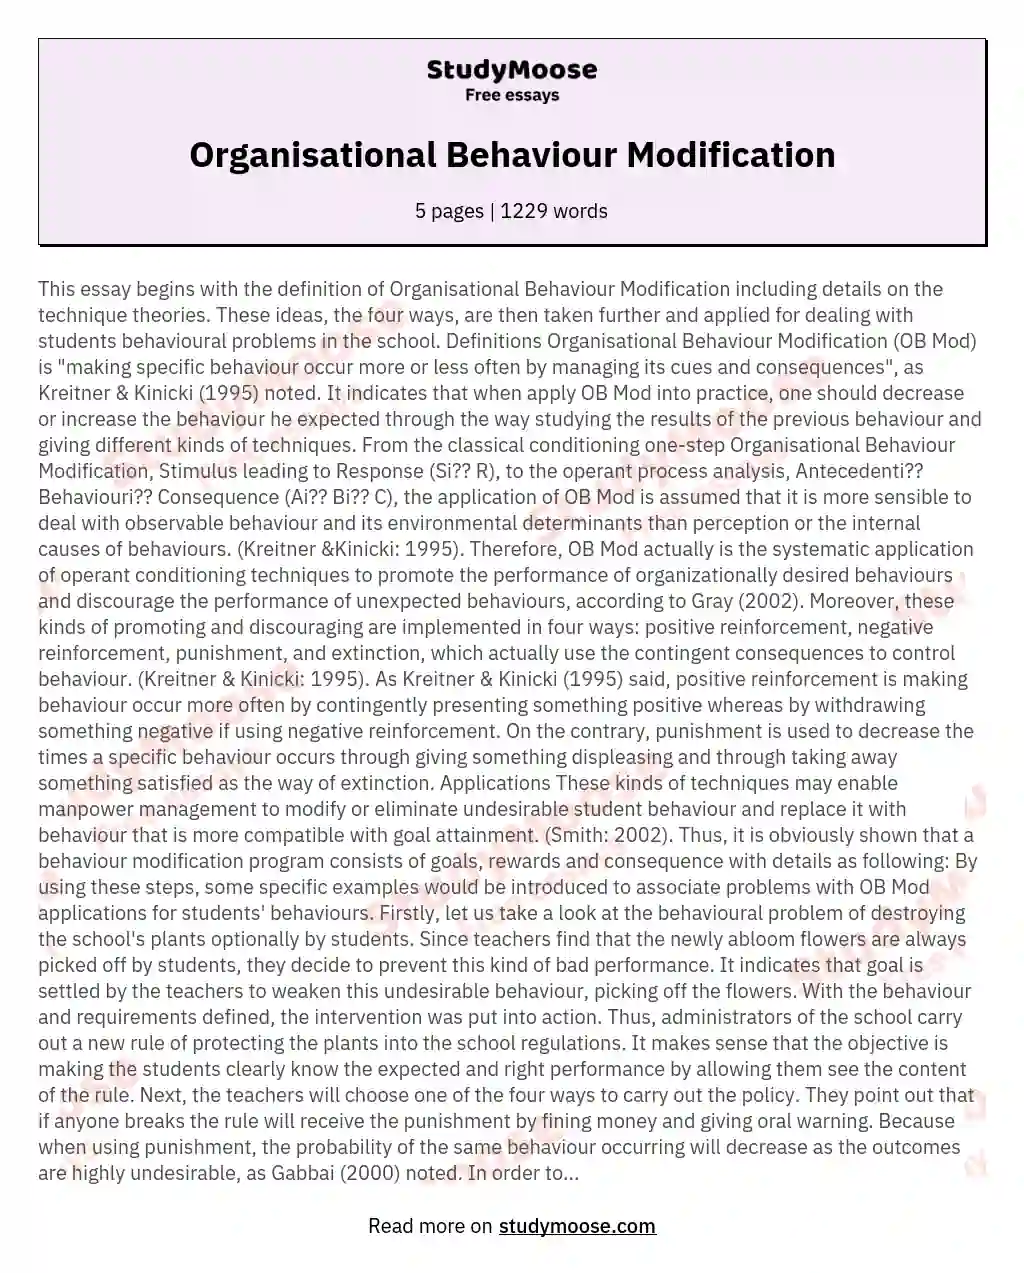 Organisational Behaviour Modification essay